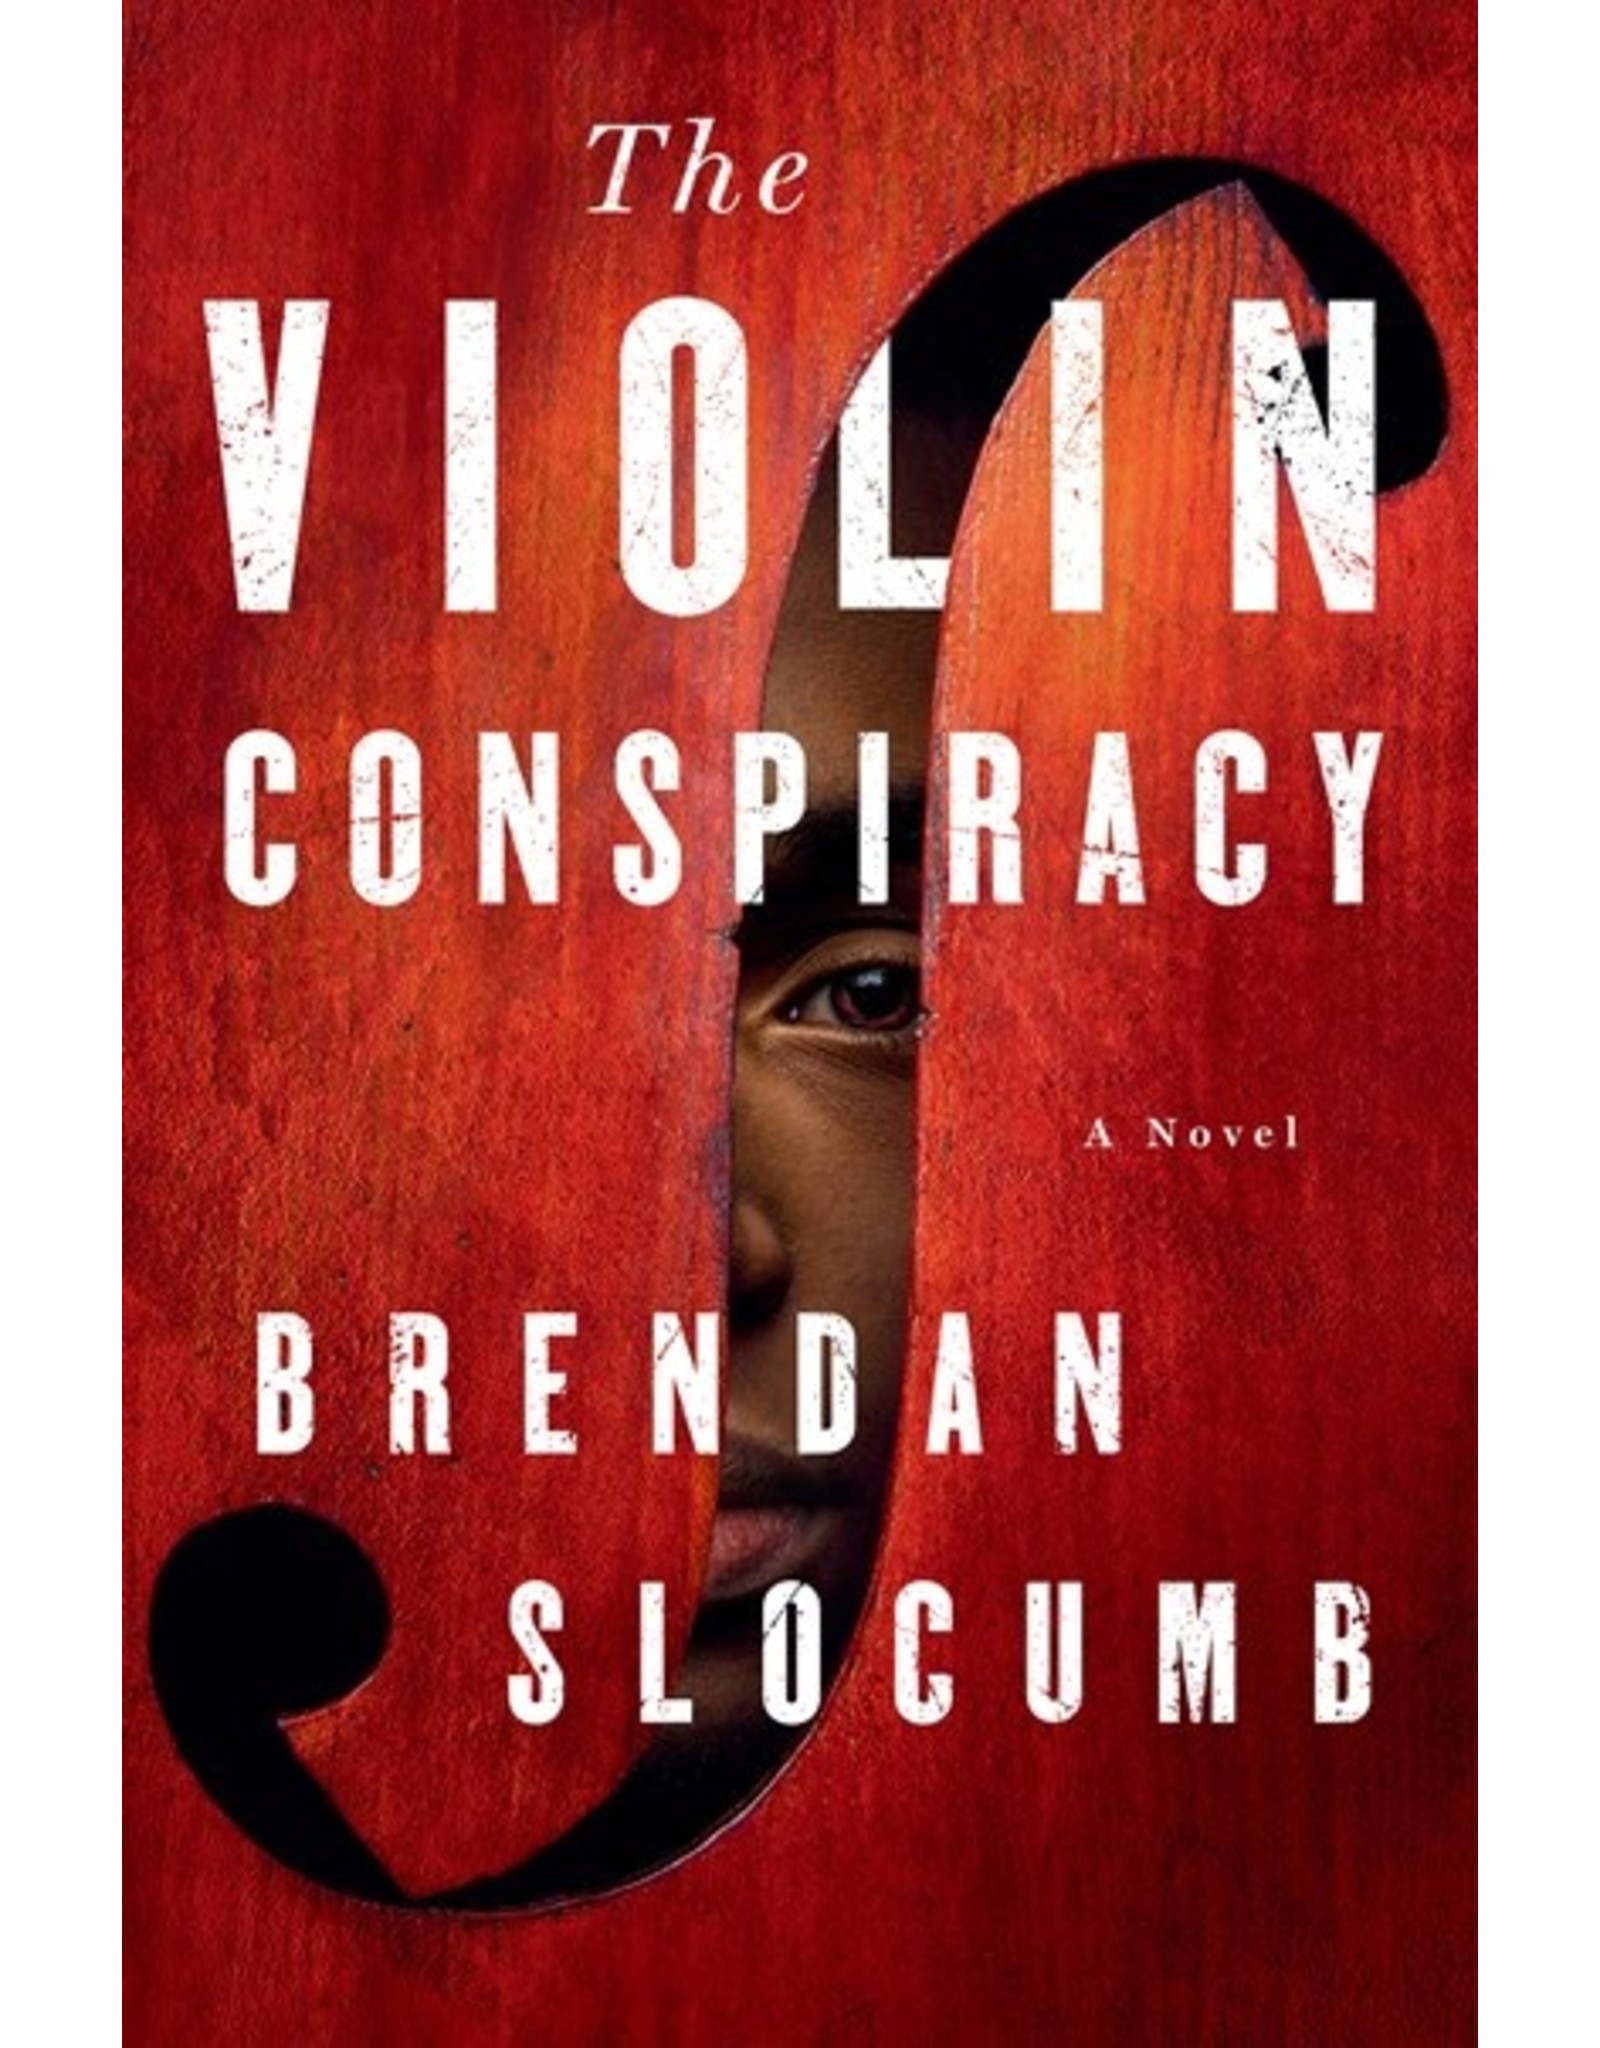 Books The Violin Conspiracy: A Novel by Brendan Slocumb (Virtual Event Feb 4th)